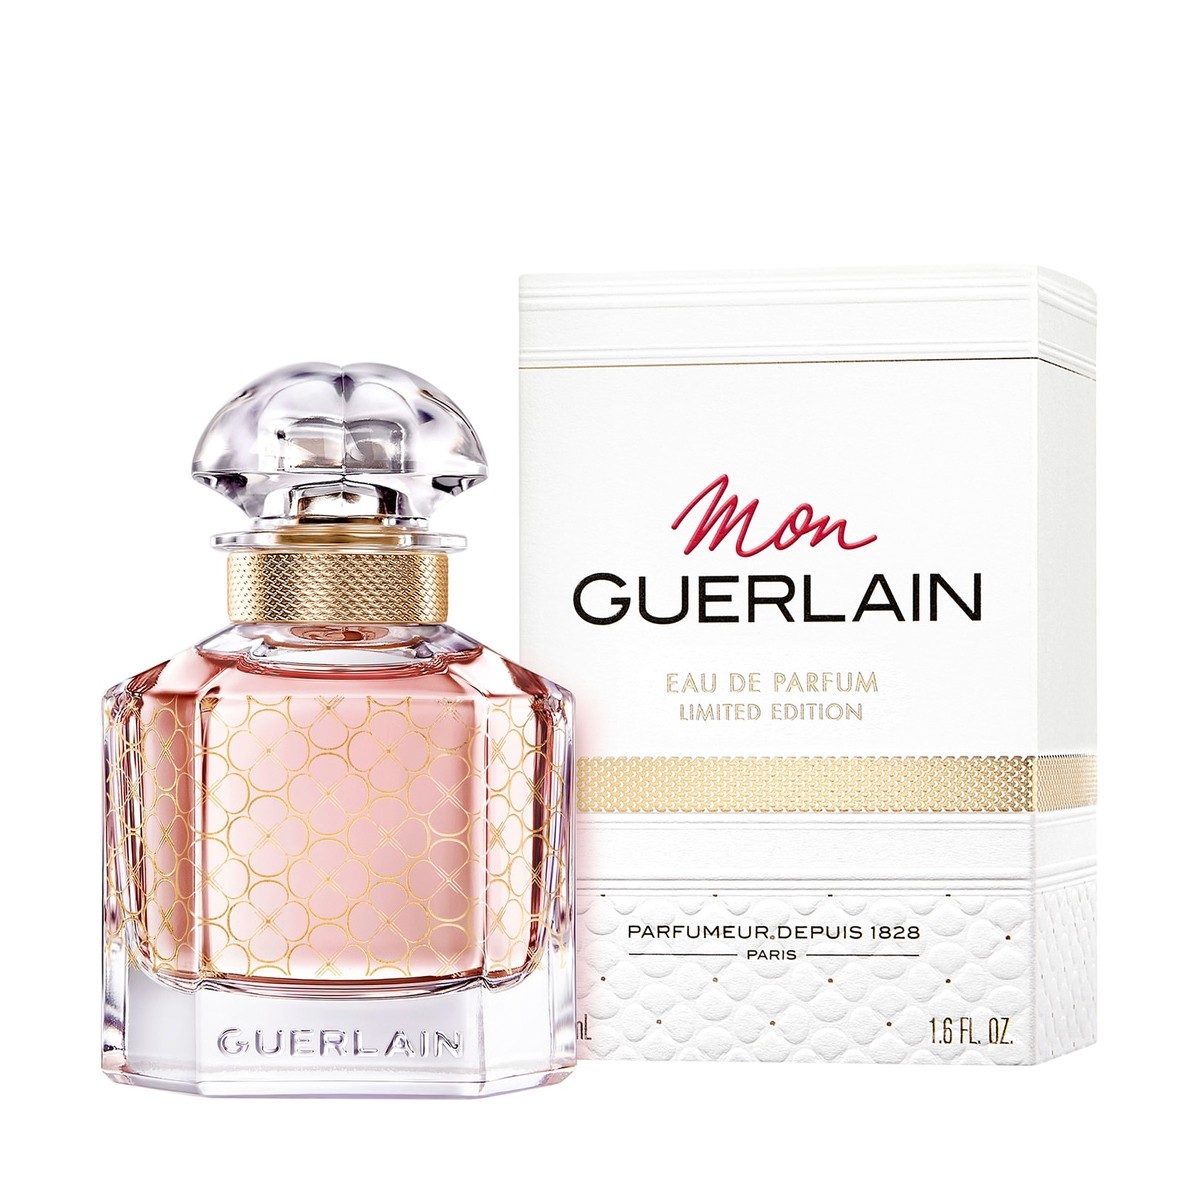 Изображение парфюма Guerlain Mon Guerlain Limited Edition 2019